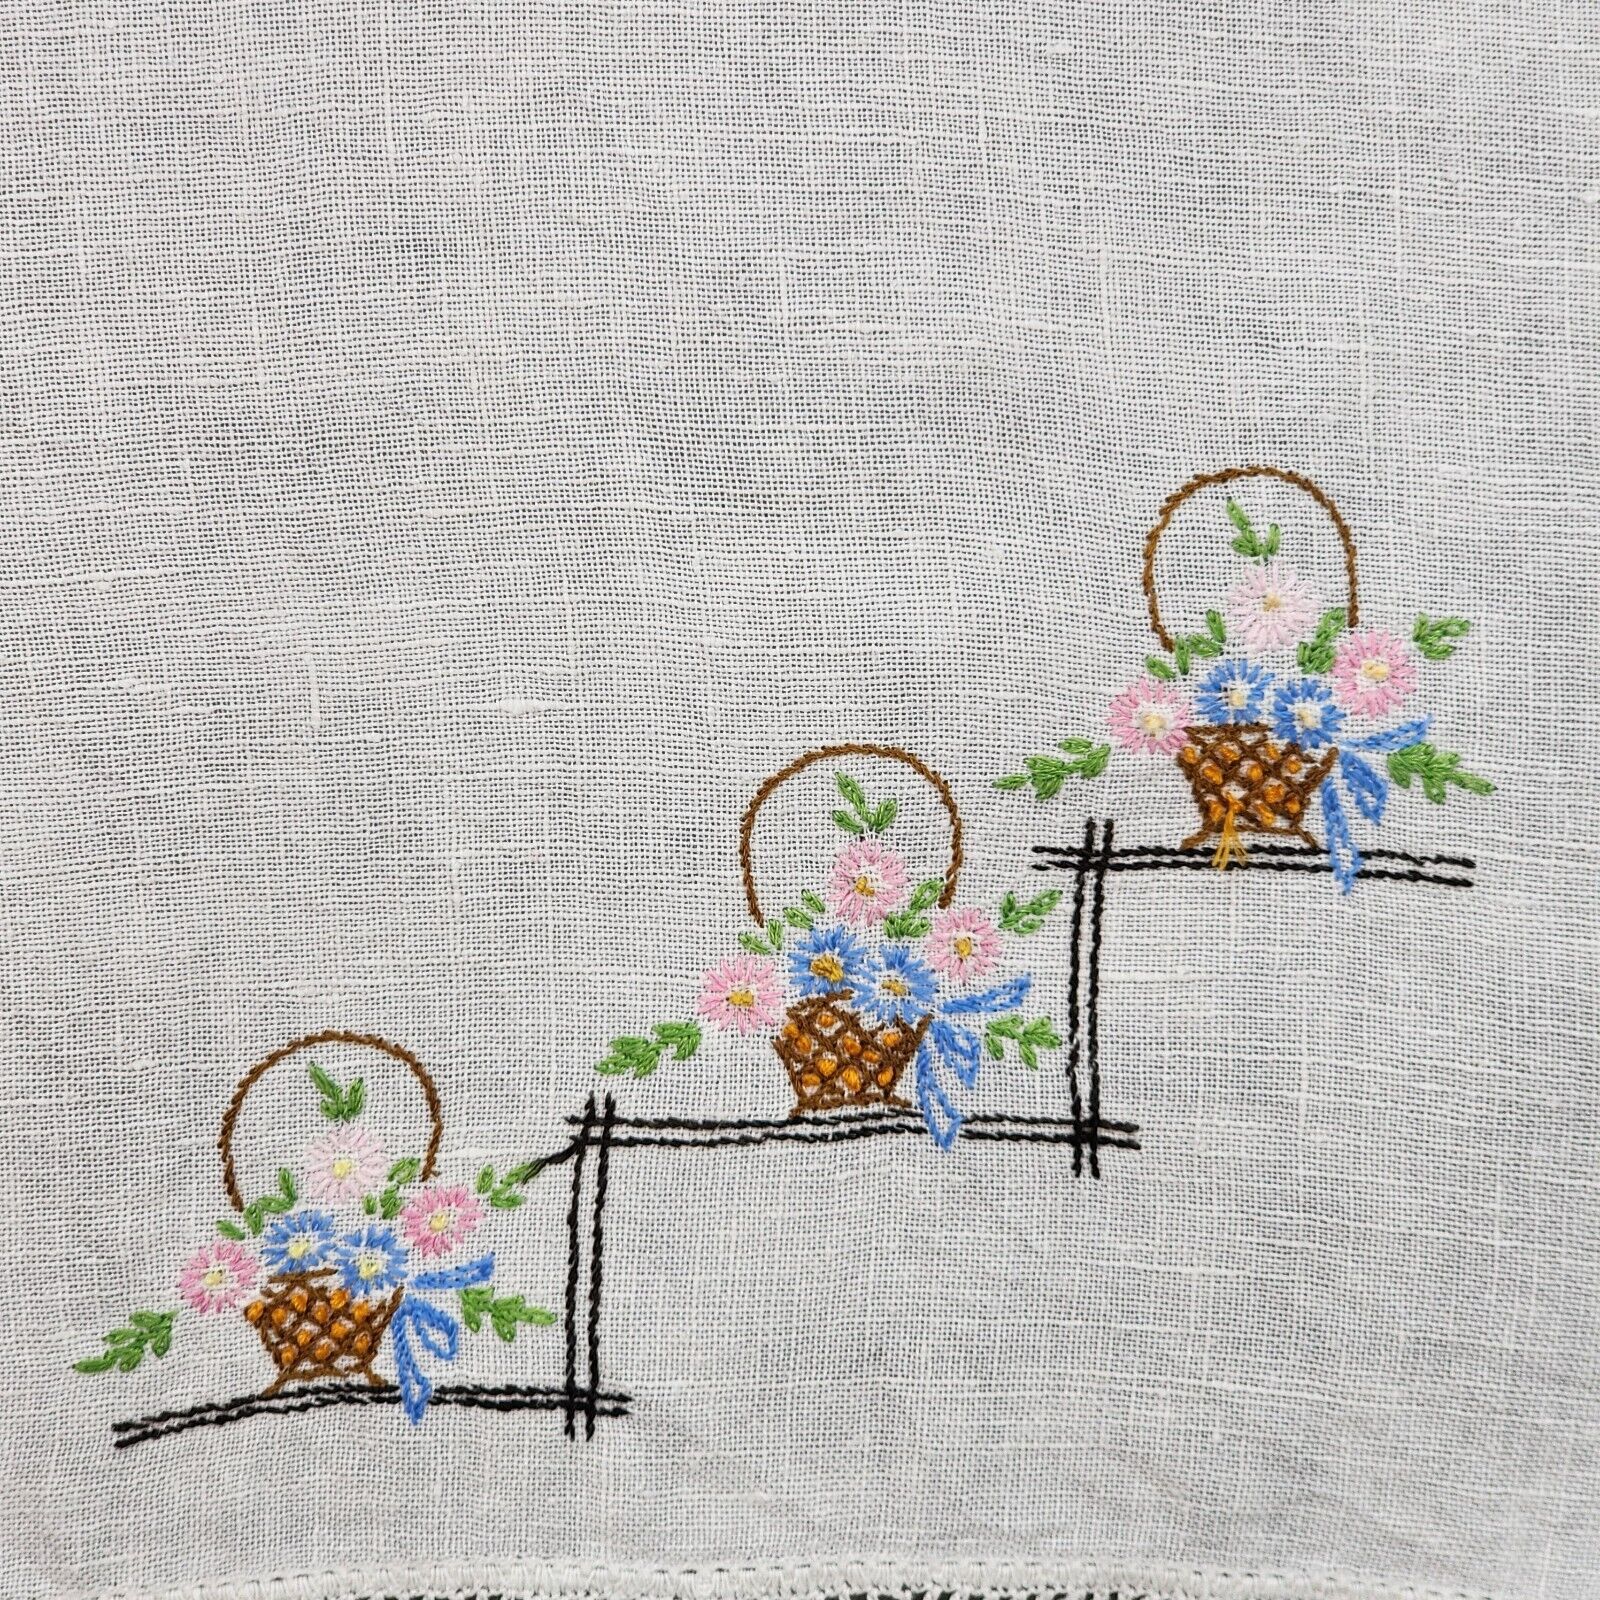 Vintage Kitchen Towel, Linen, Basket Embroidery With Flowers 14x23 Crochet Edges